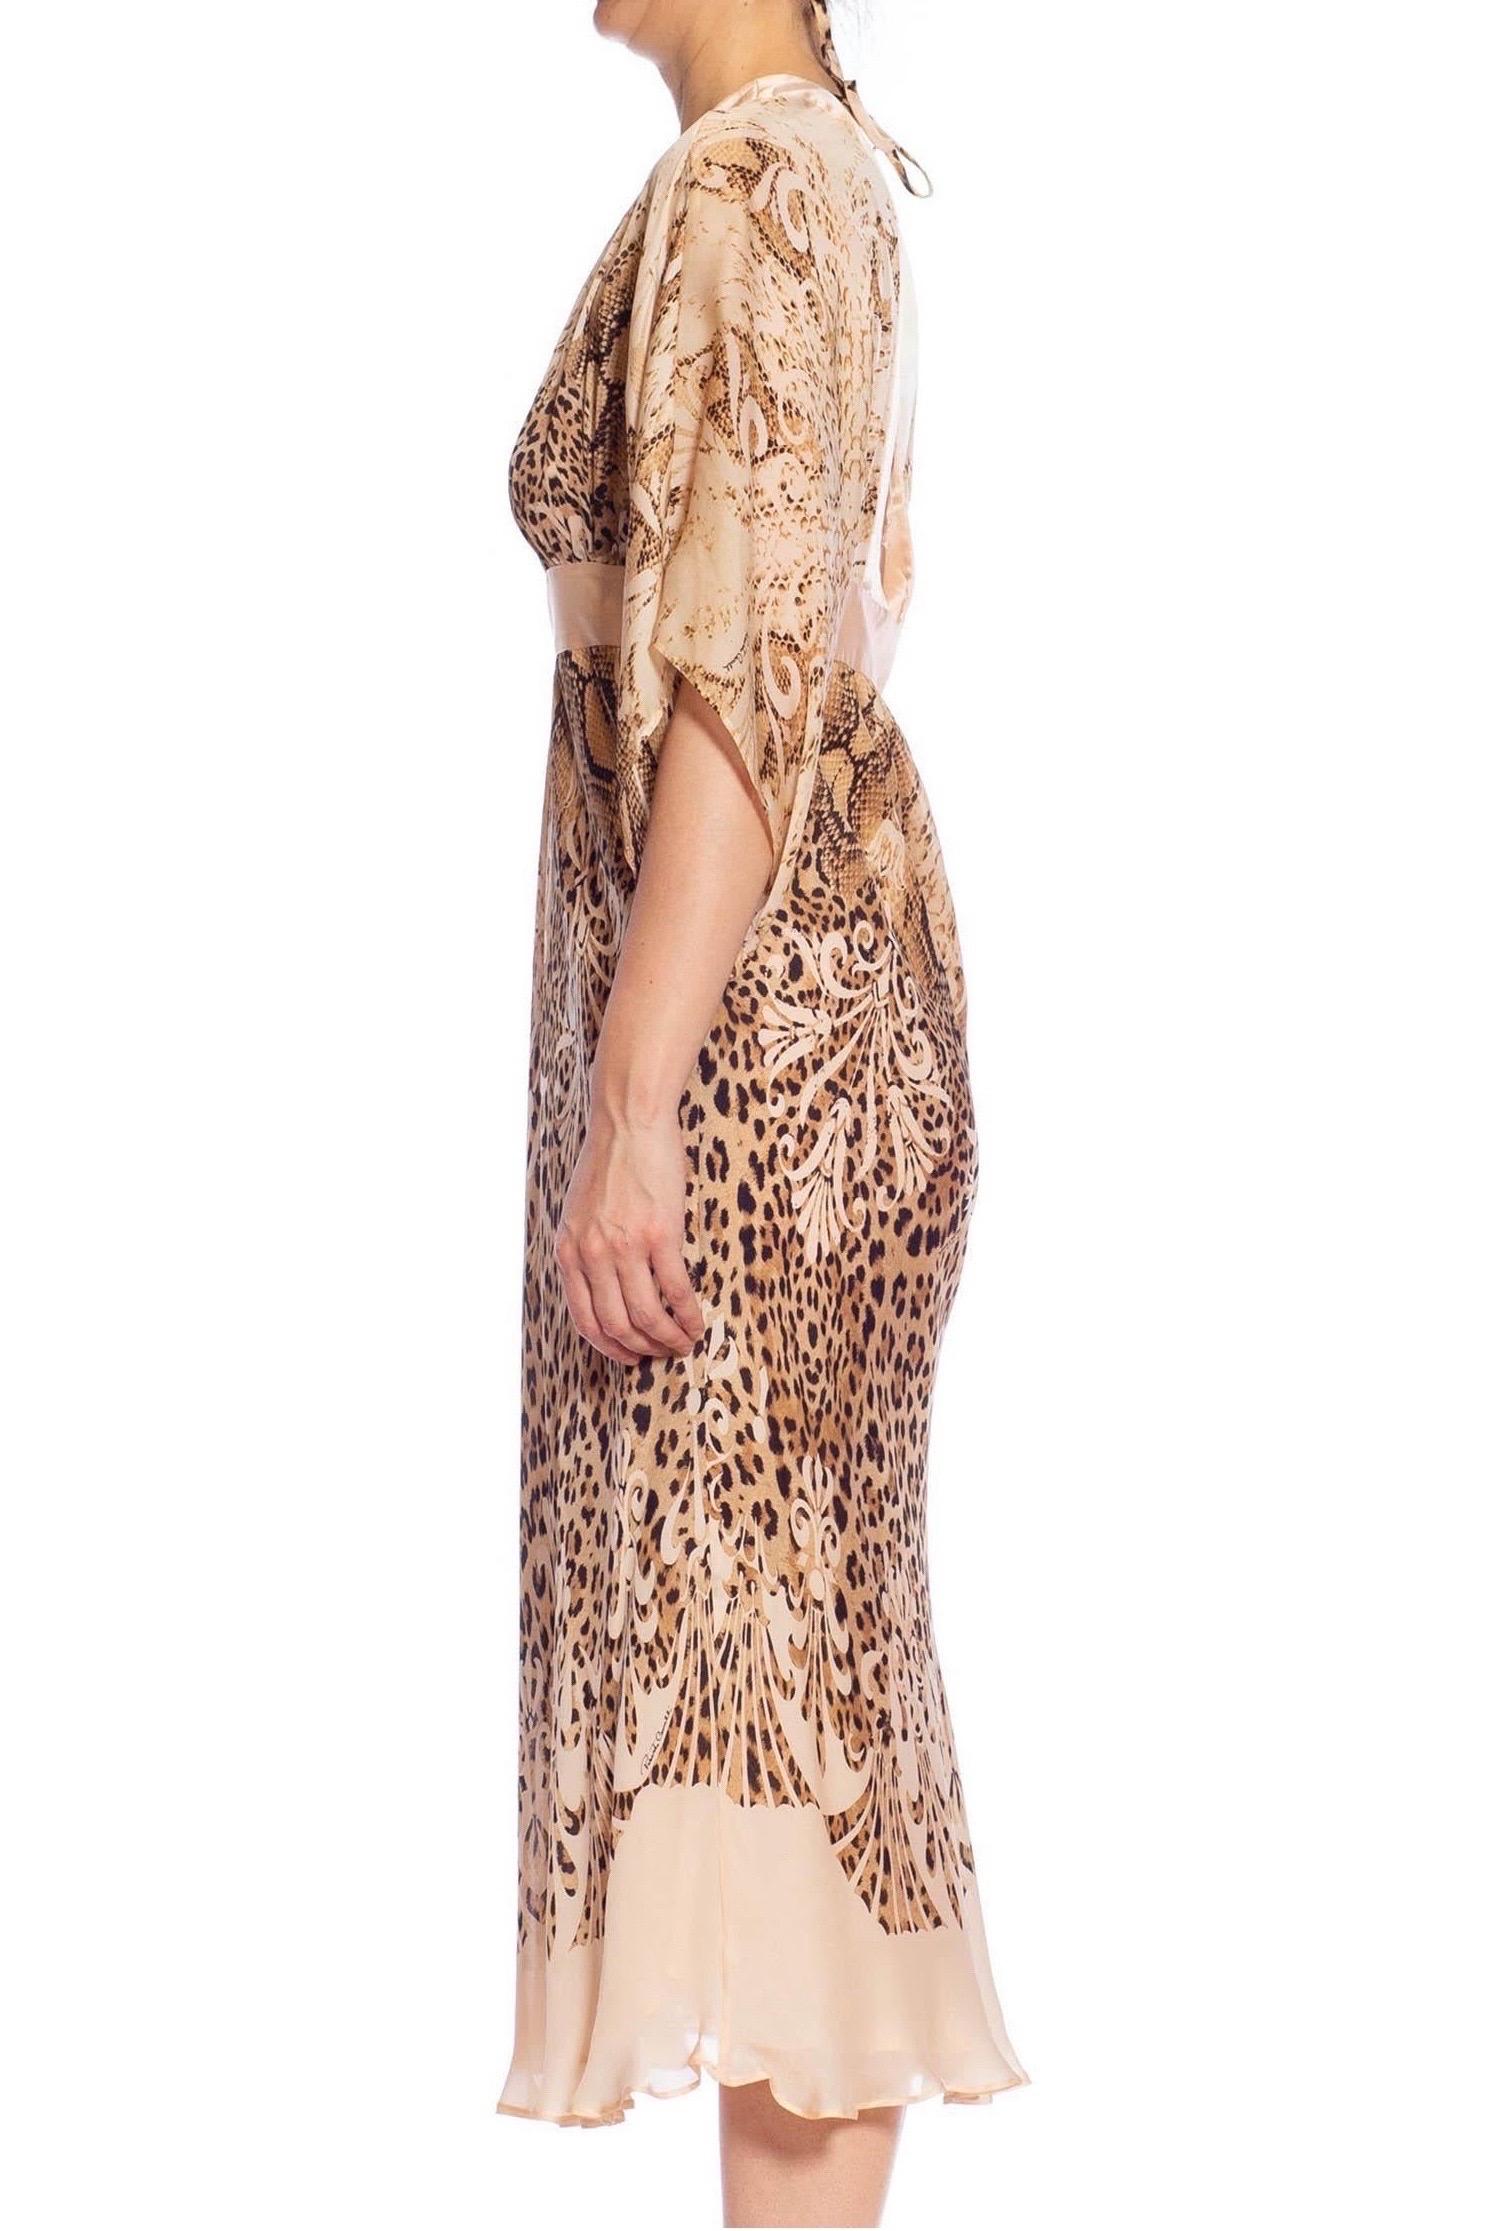 Women's 2000S ROBERTO CAVALLI Leopard Print Silk Kaftan Style Tunic Dress For Sale